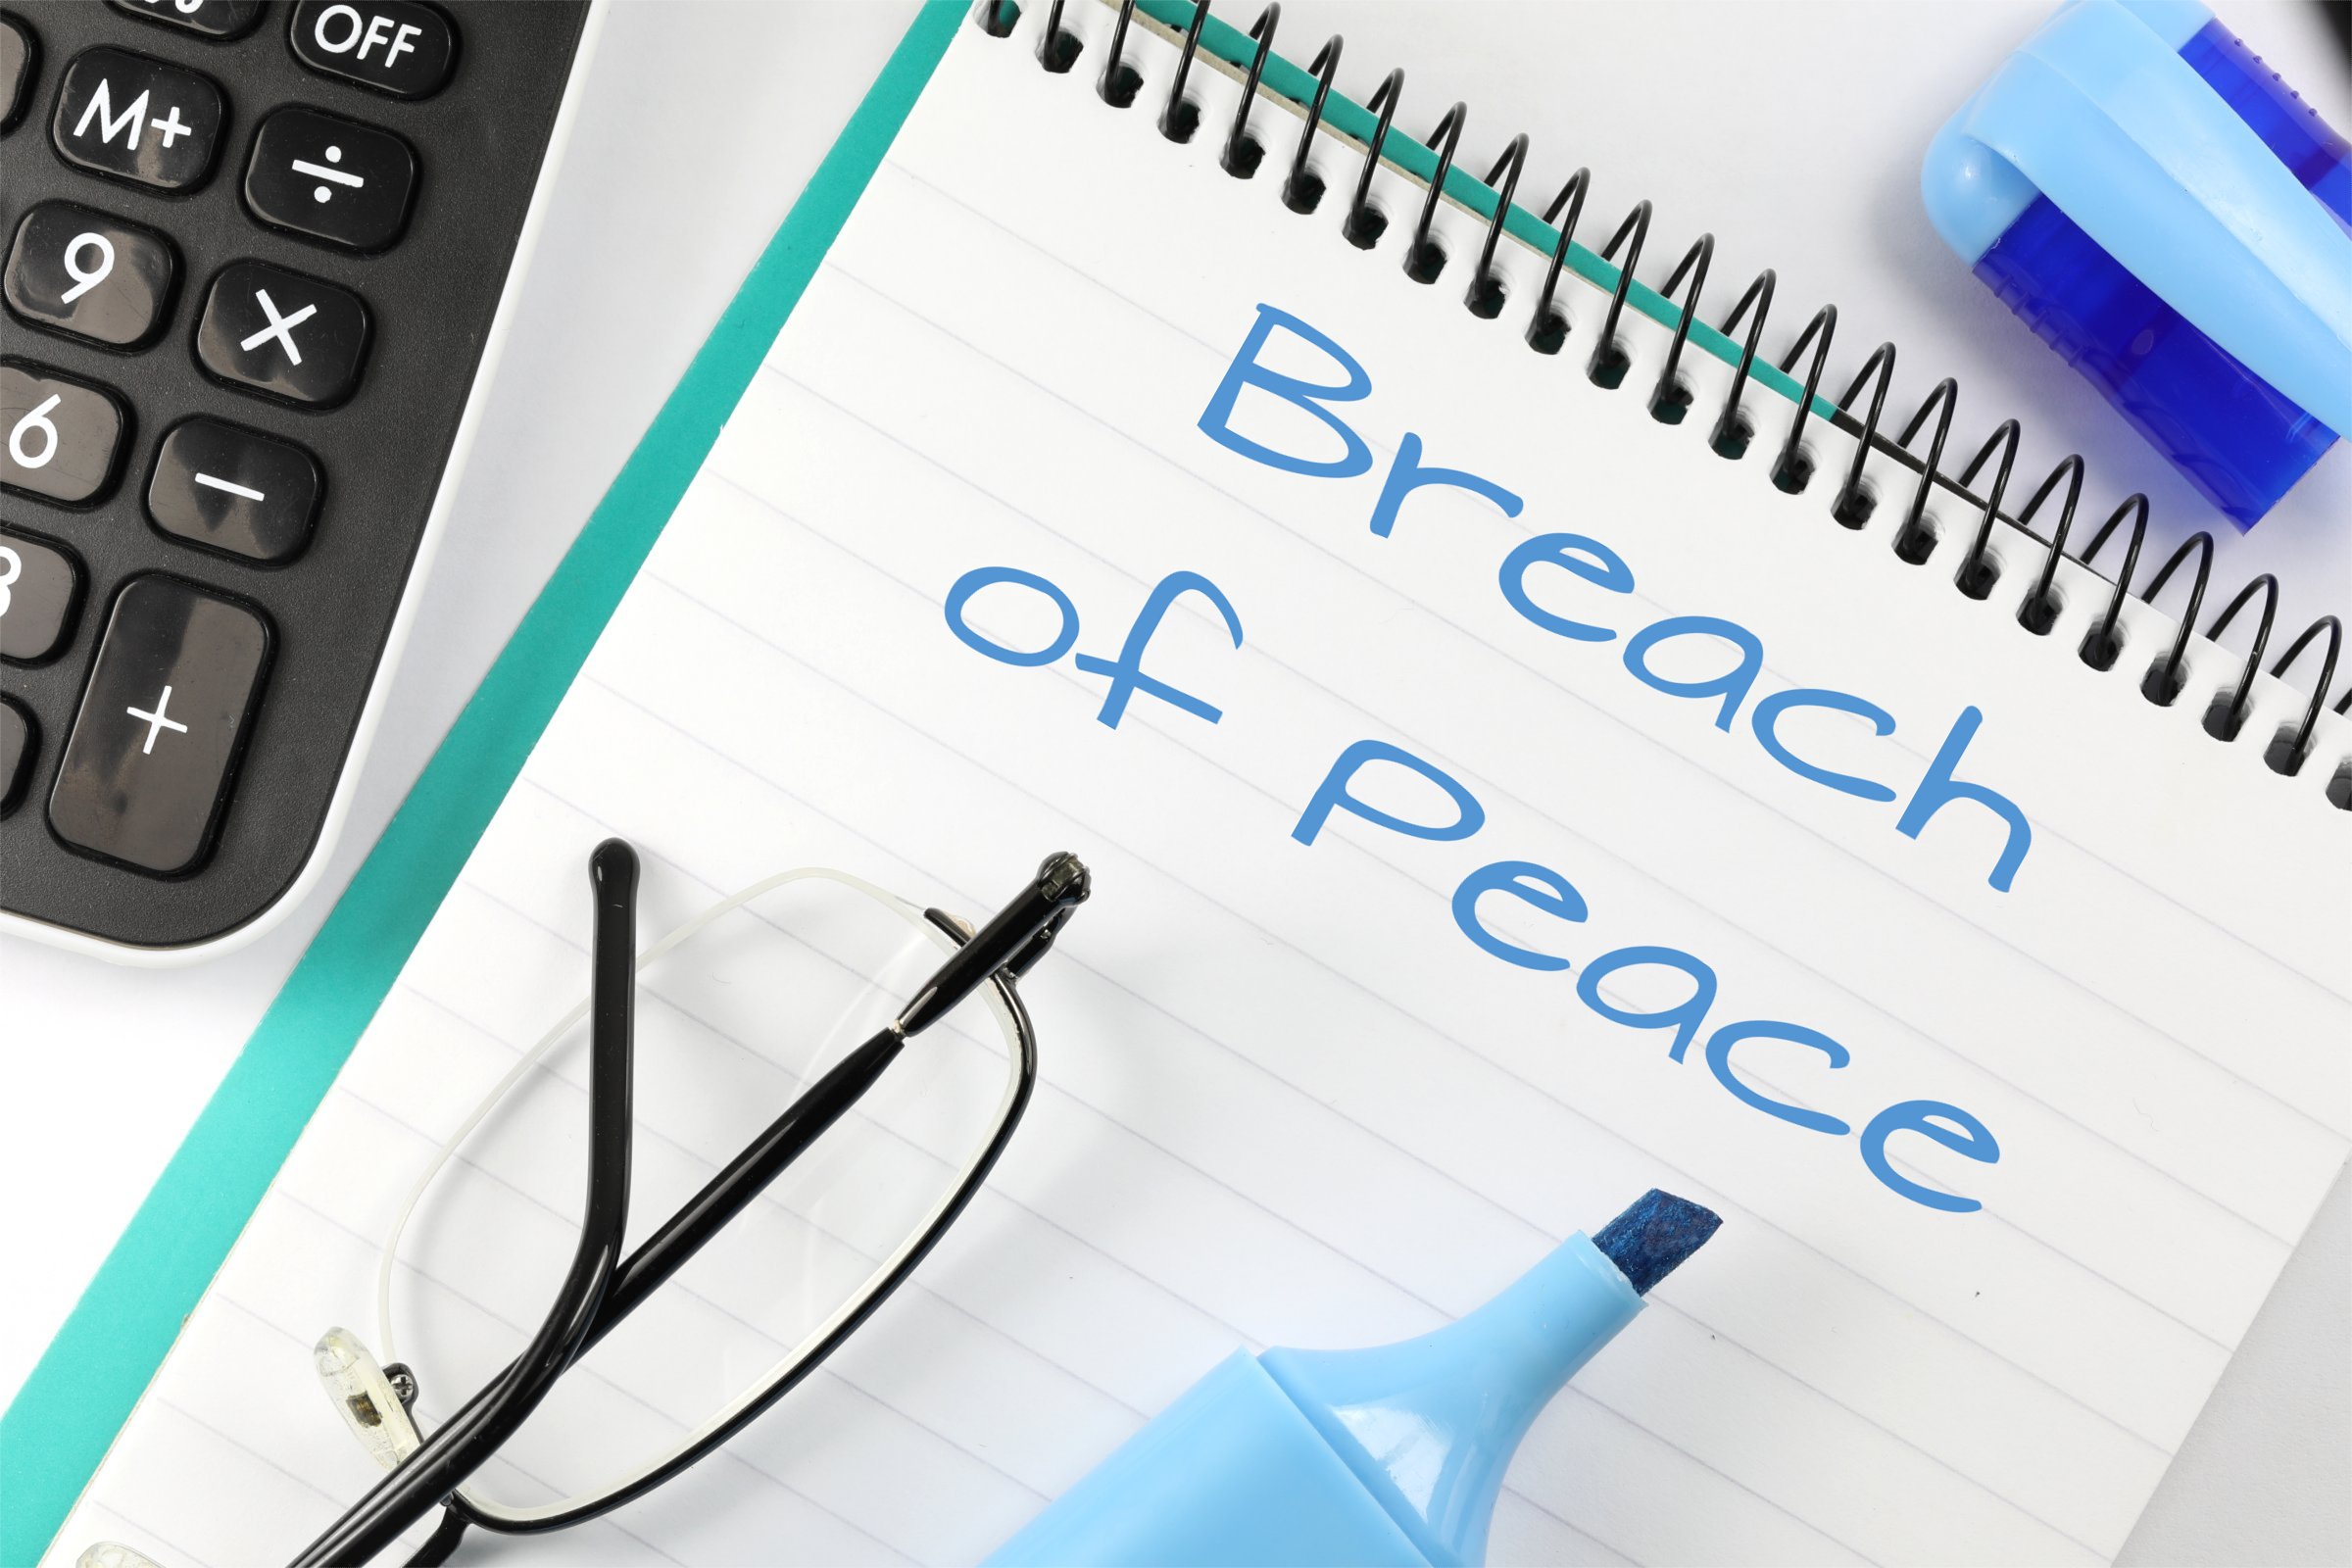 breach of peace